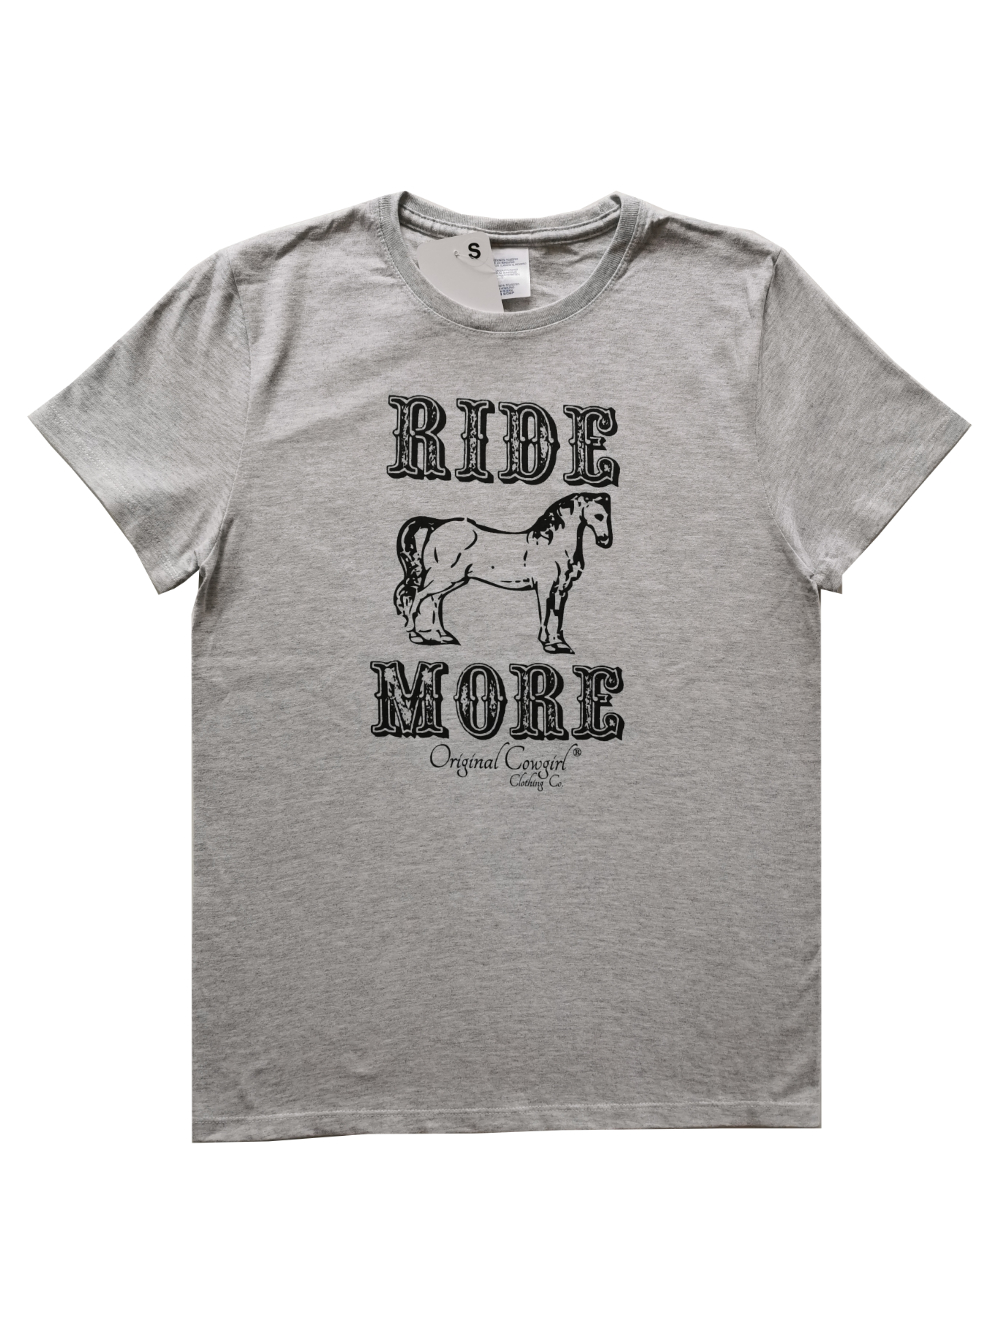 Ladies T-shirt "Ride more", gray